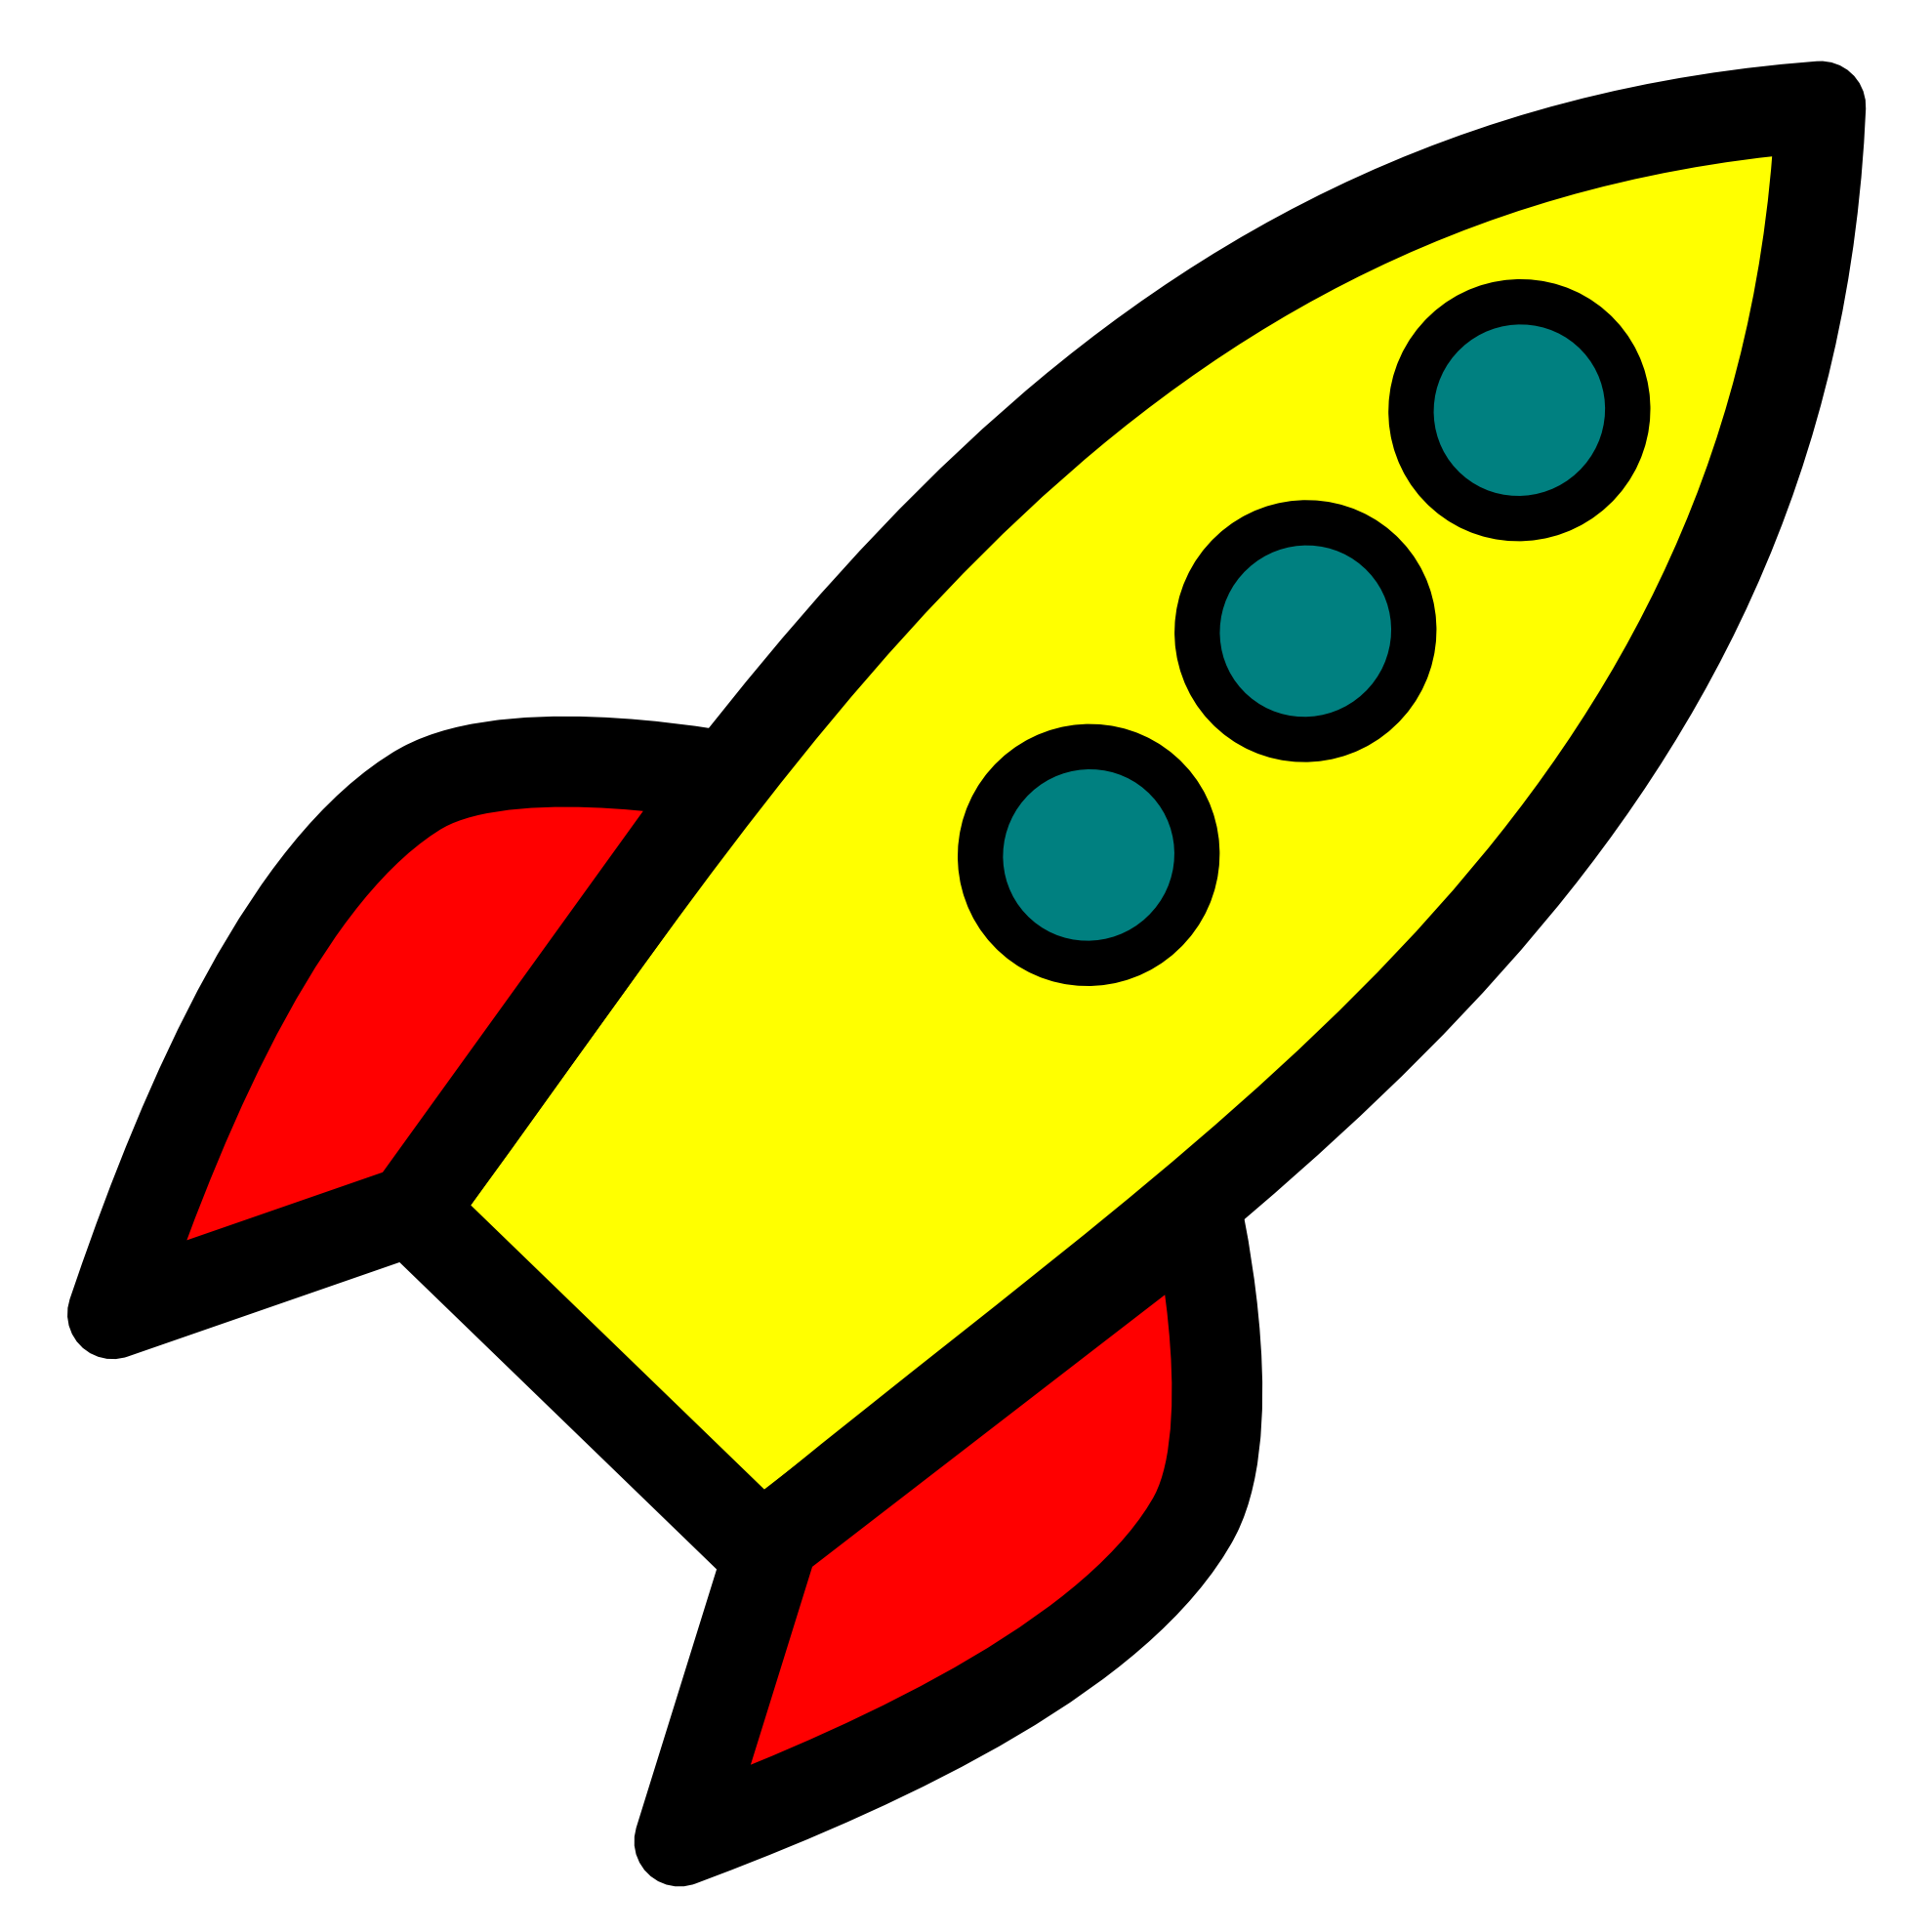 Rocket Ship Clipart & Rocket Ship Clip Art Images.